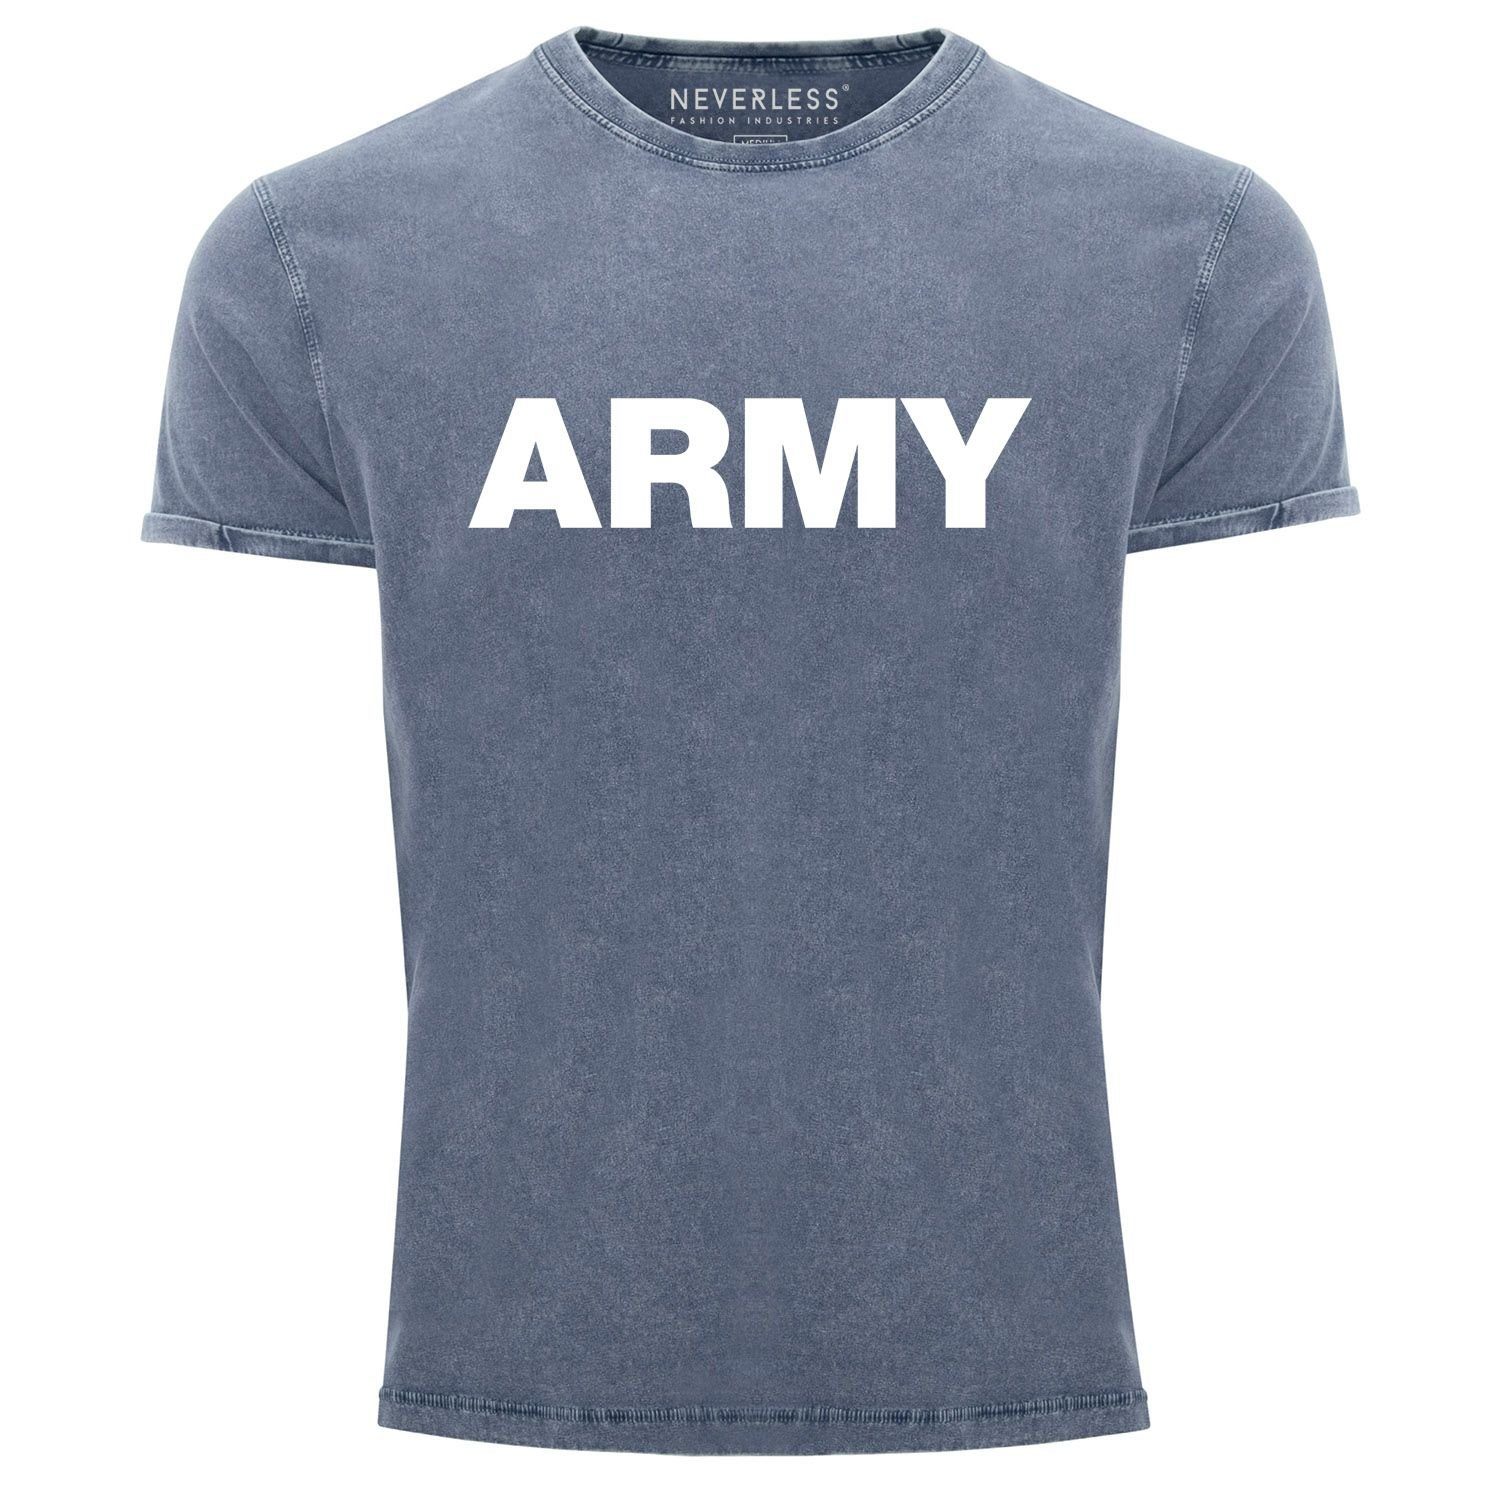 Neverless Print-Shirt Herren Vintage Shirt Army Printshirt T-Shirt Used Look Slim Fit Neverless® mit Print blau